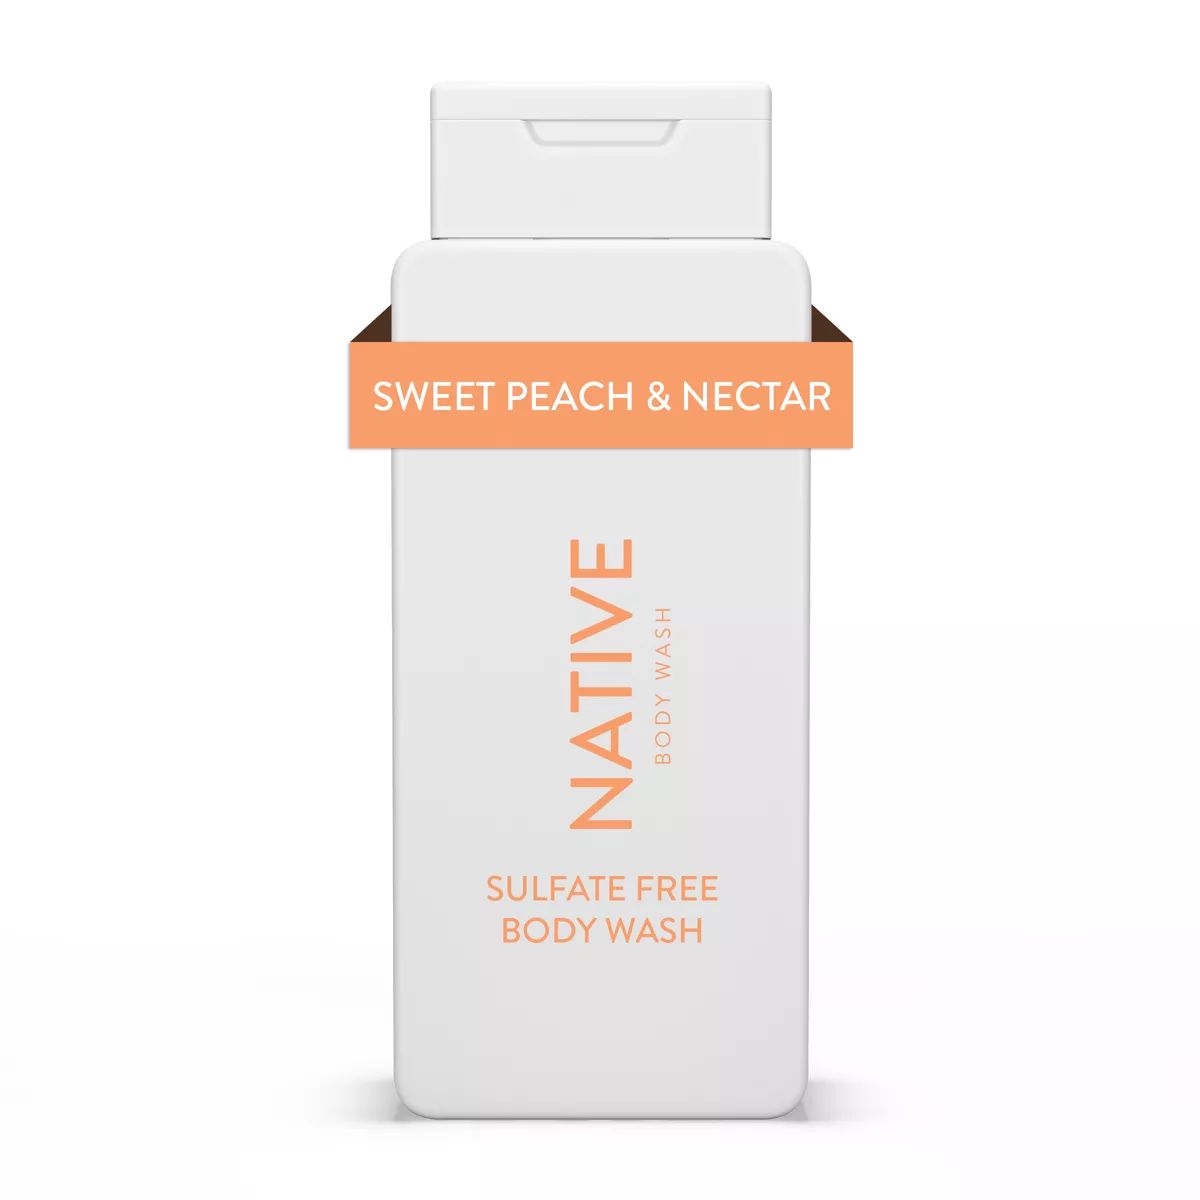 Native Body Wash - Sweet Peach & Nectar - Sulfate Free - 18 fl oz | Target